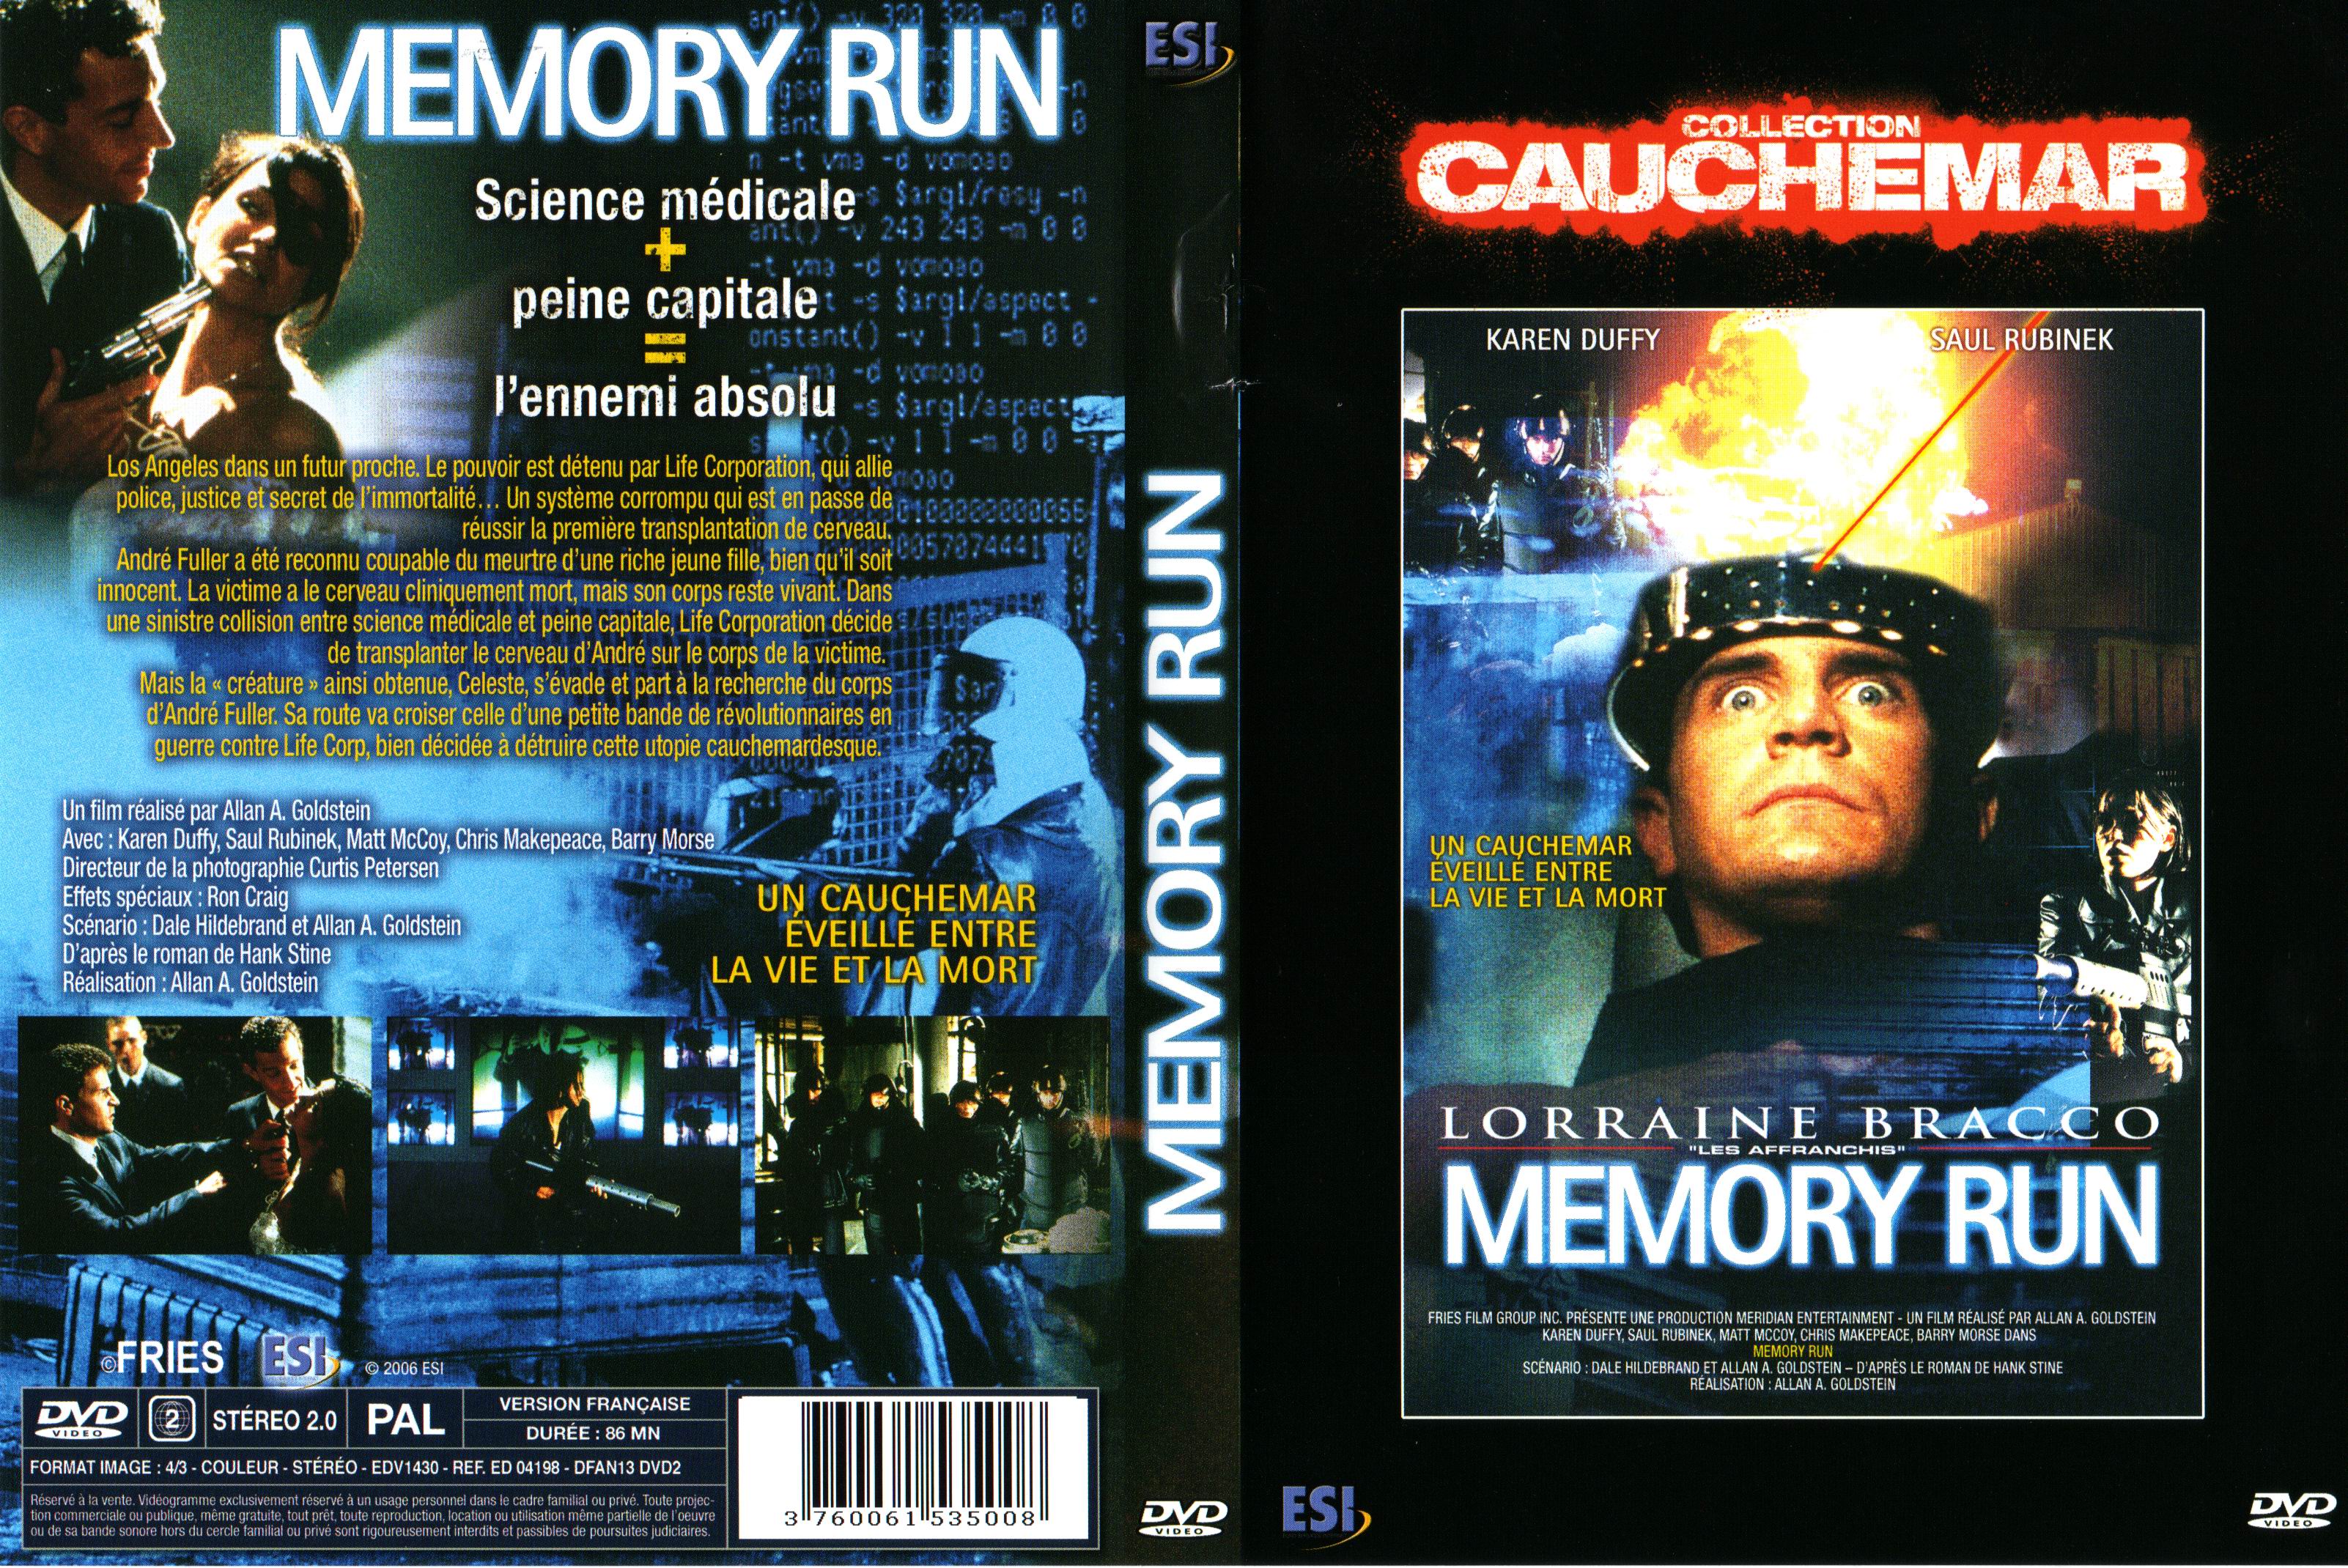 Jaquette DVD Memory run